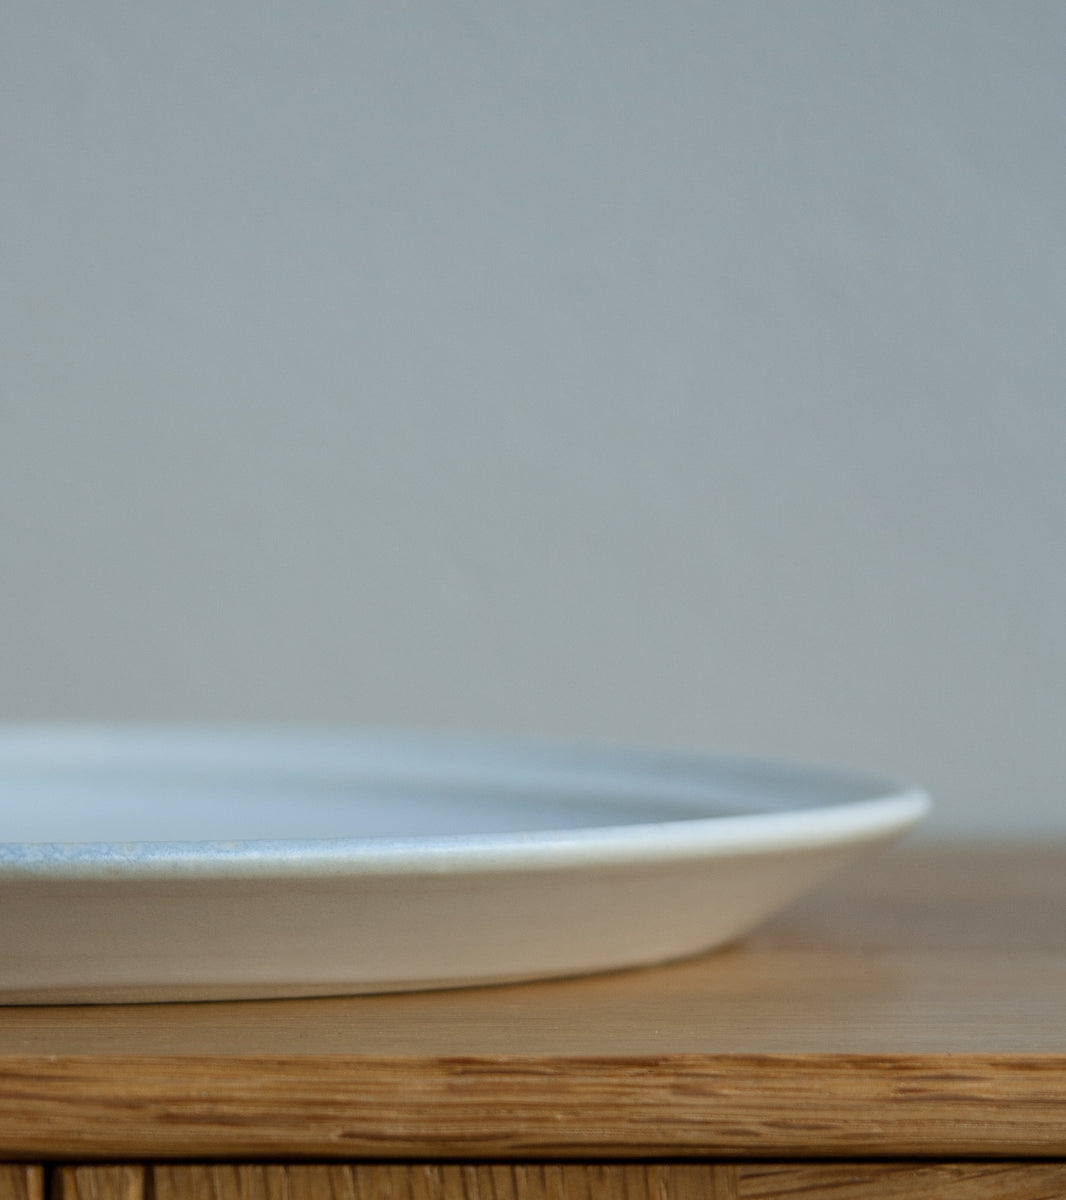 Rimmed 'Noma' Plate White & Blue Glaze Kasper Würtz - Image 5